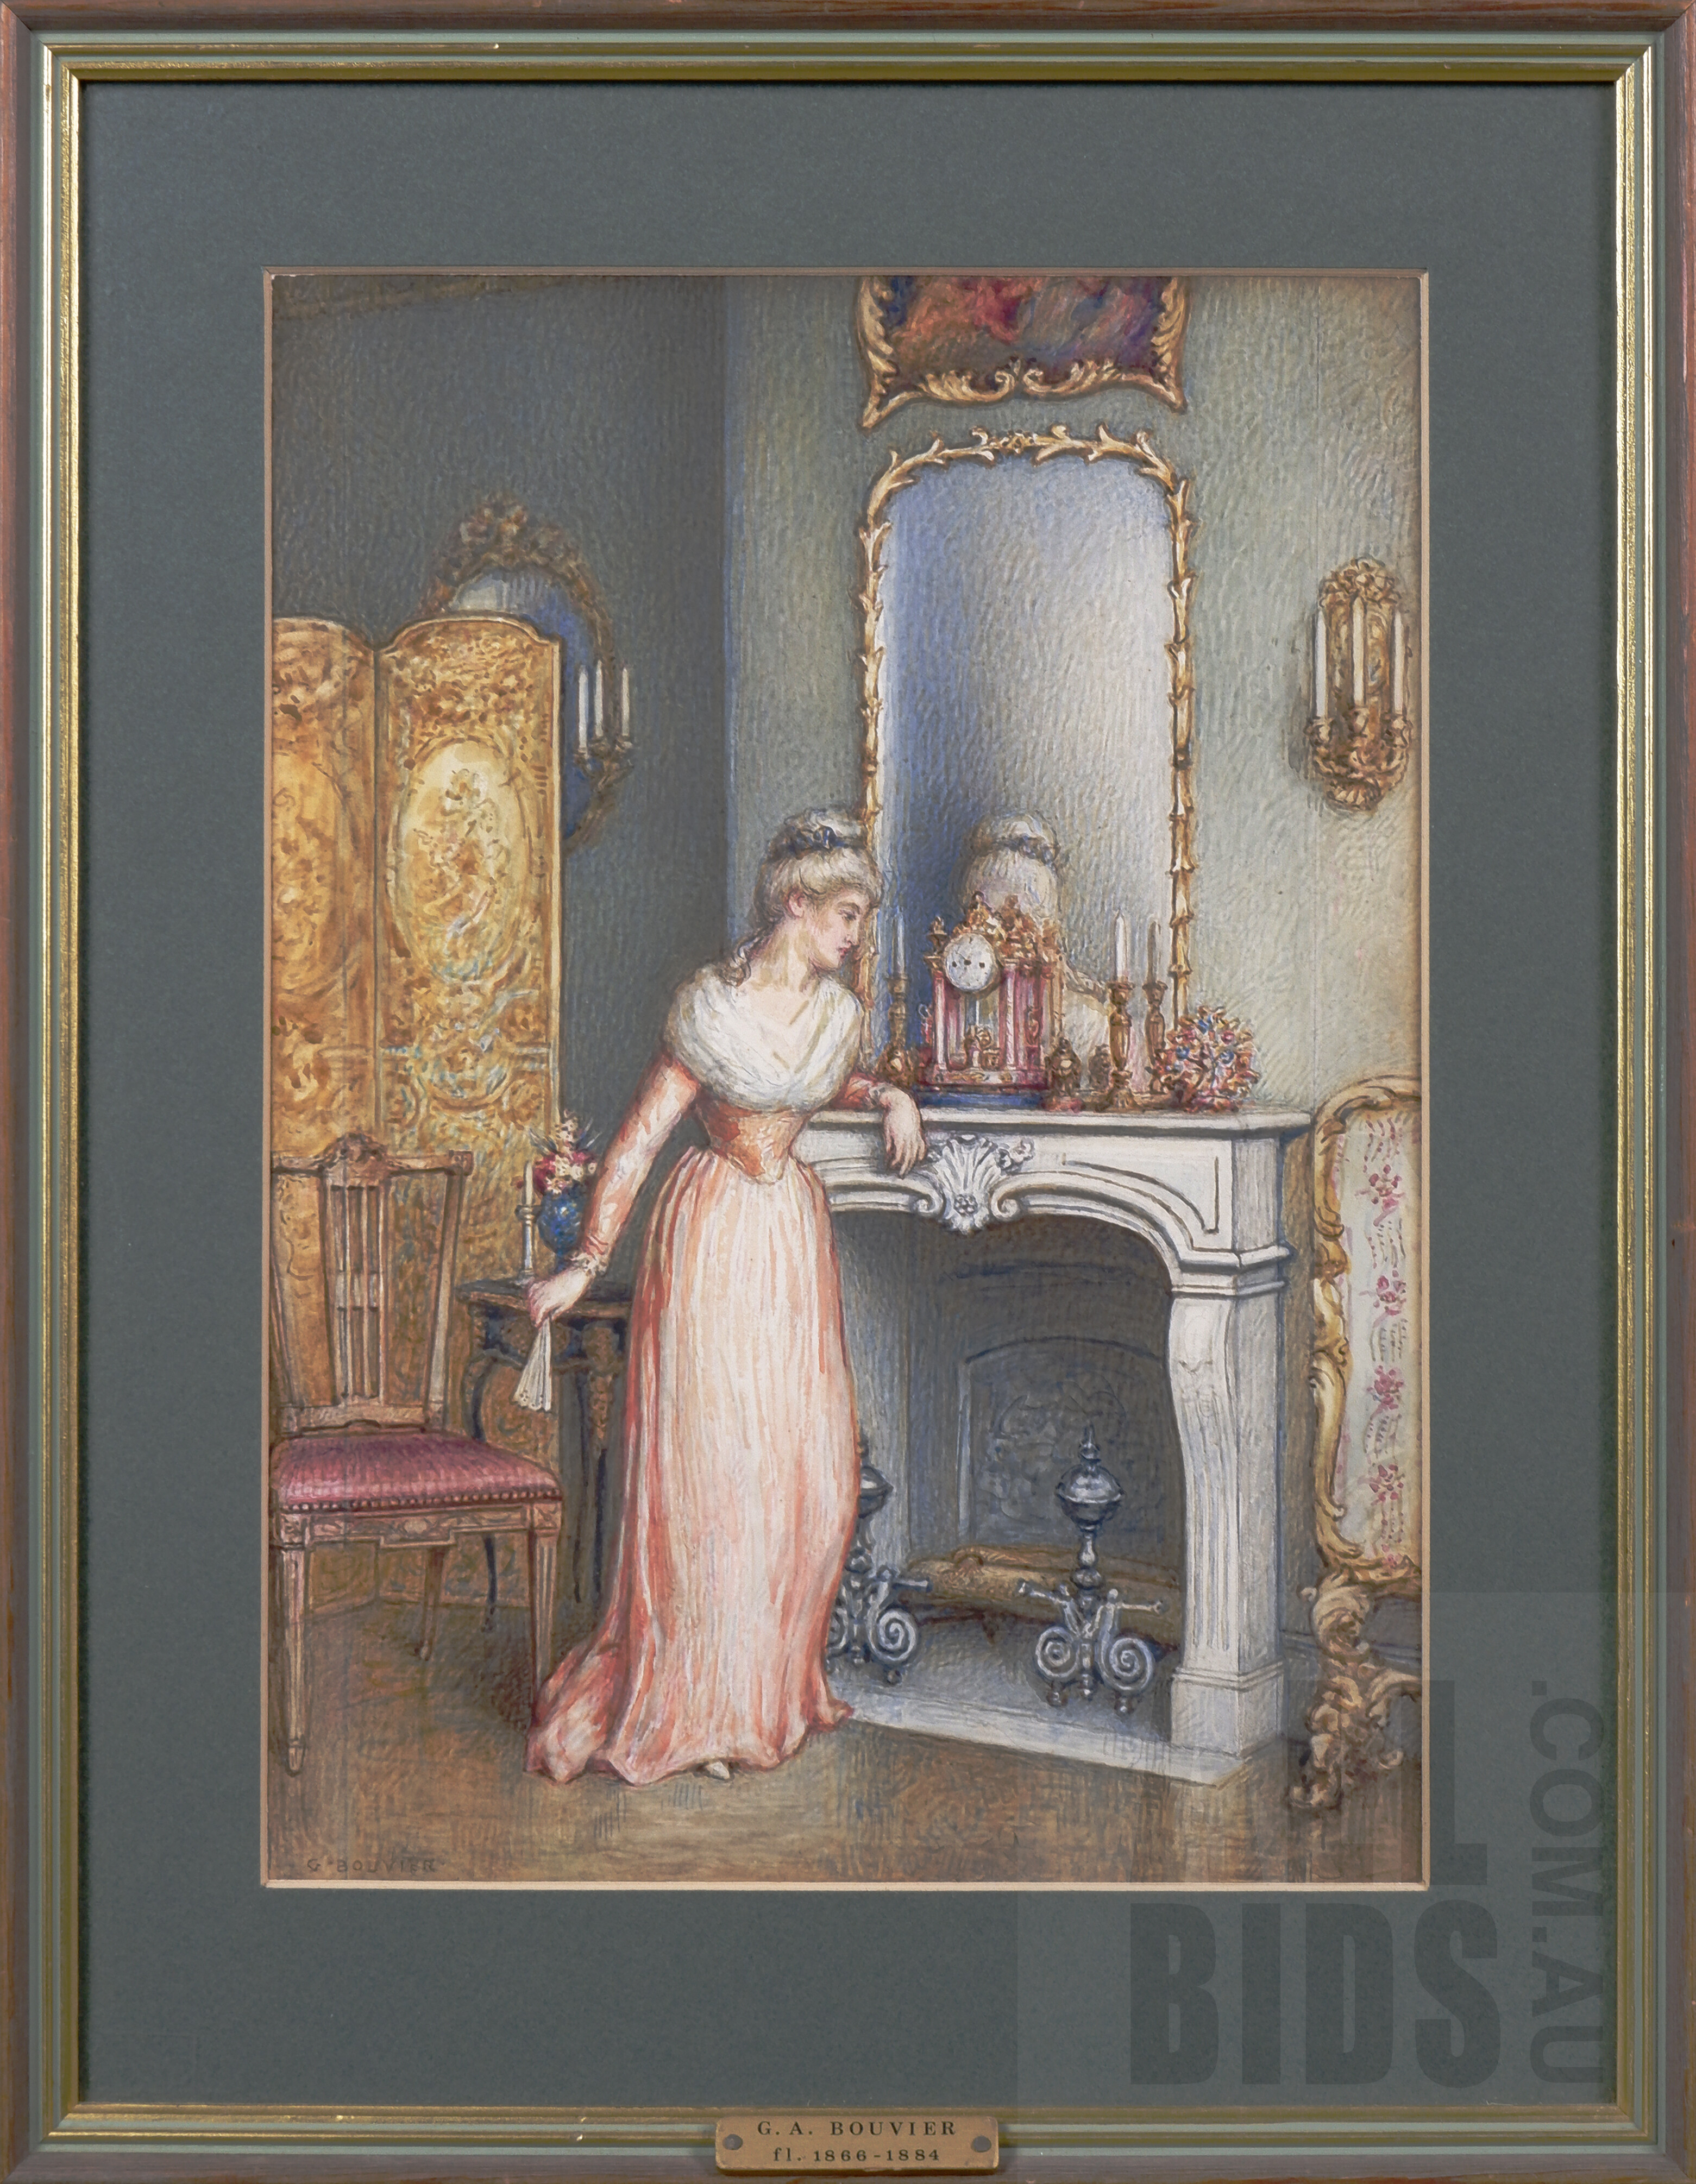 'Gustavus A. Bouvier (French/British, active 1866-1884), An Elegant Lady, watercolour, 34 x 24.5cm'